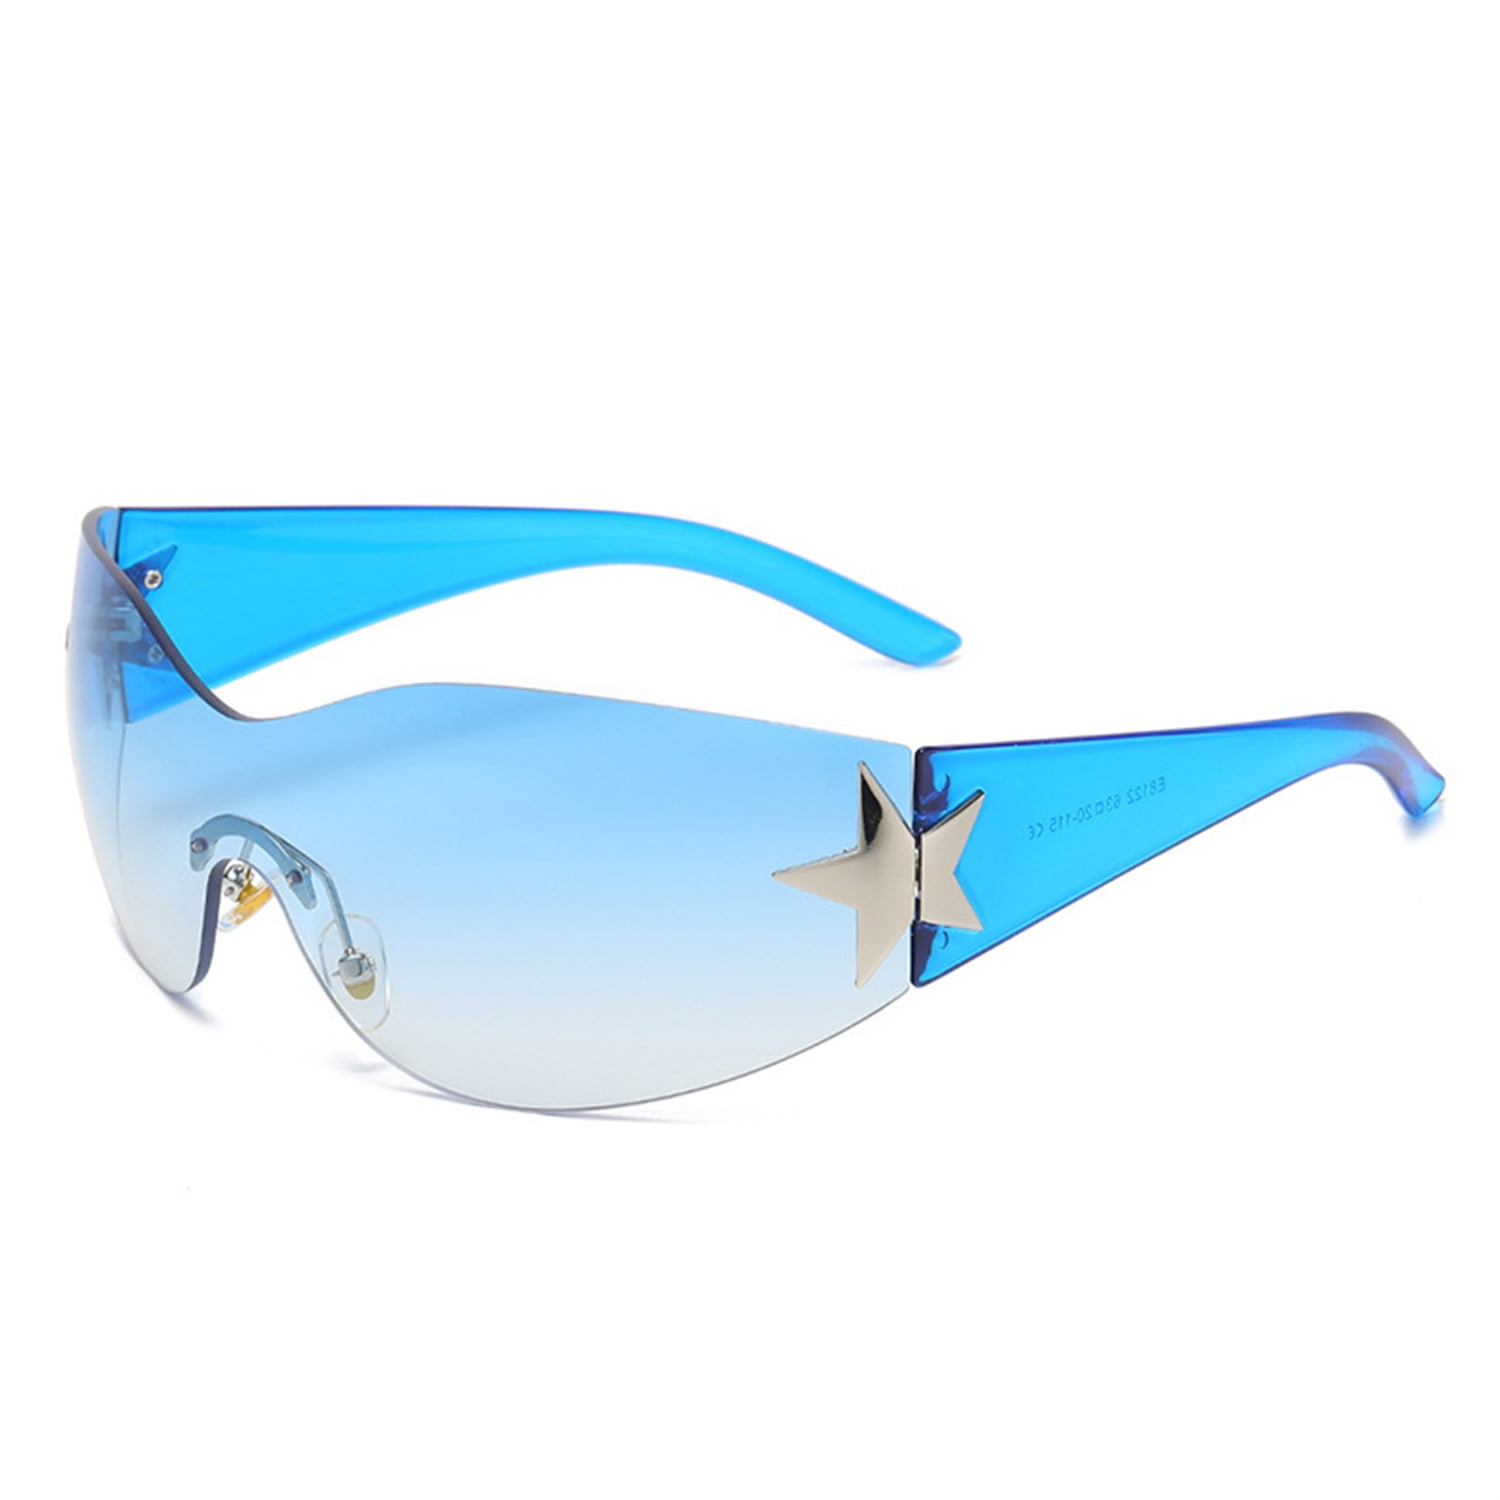 Custom High Quality Square Lens Summer Sunglasses in - Depop